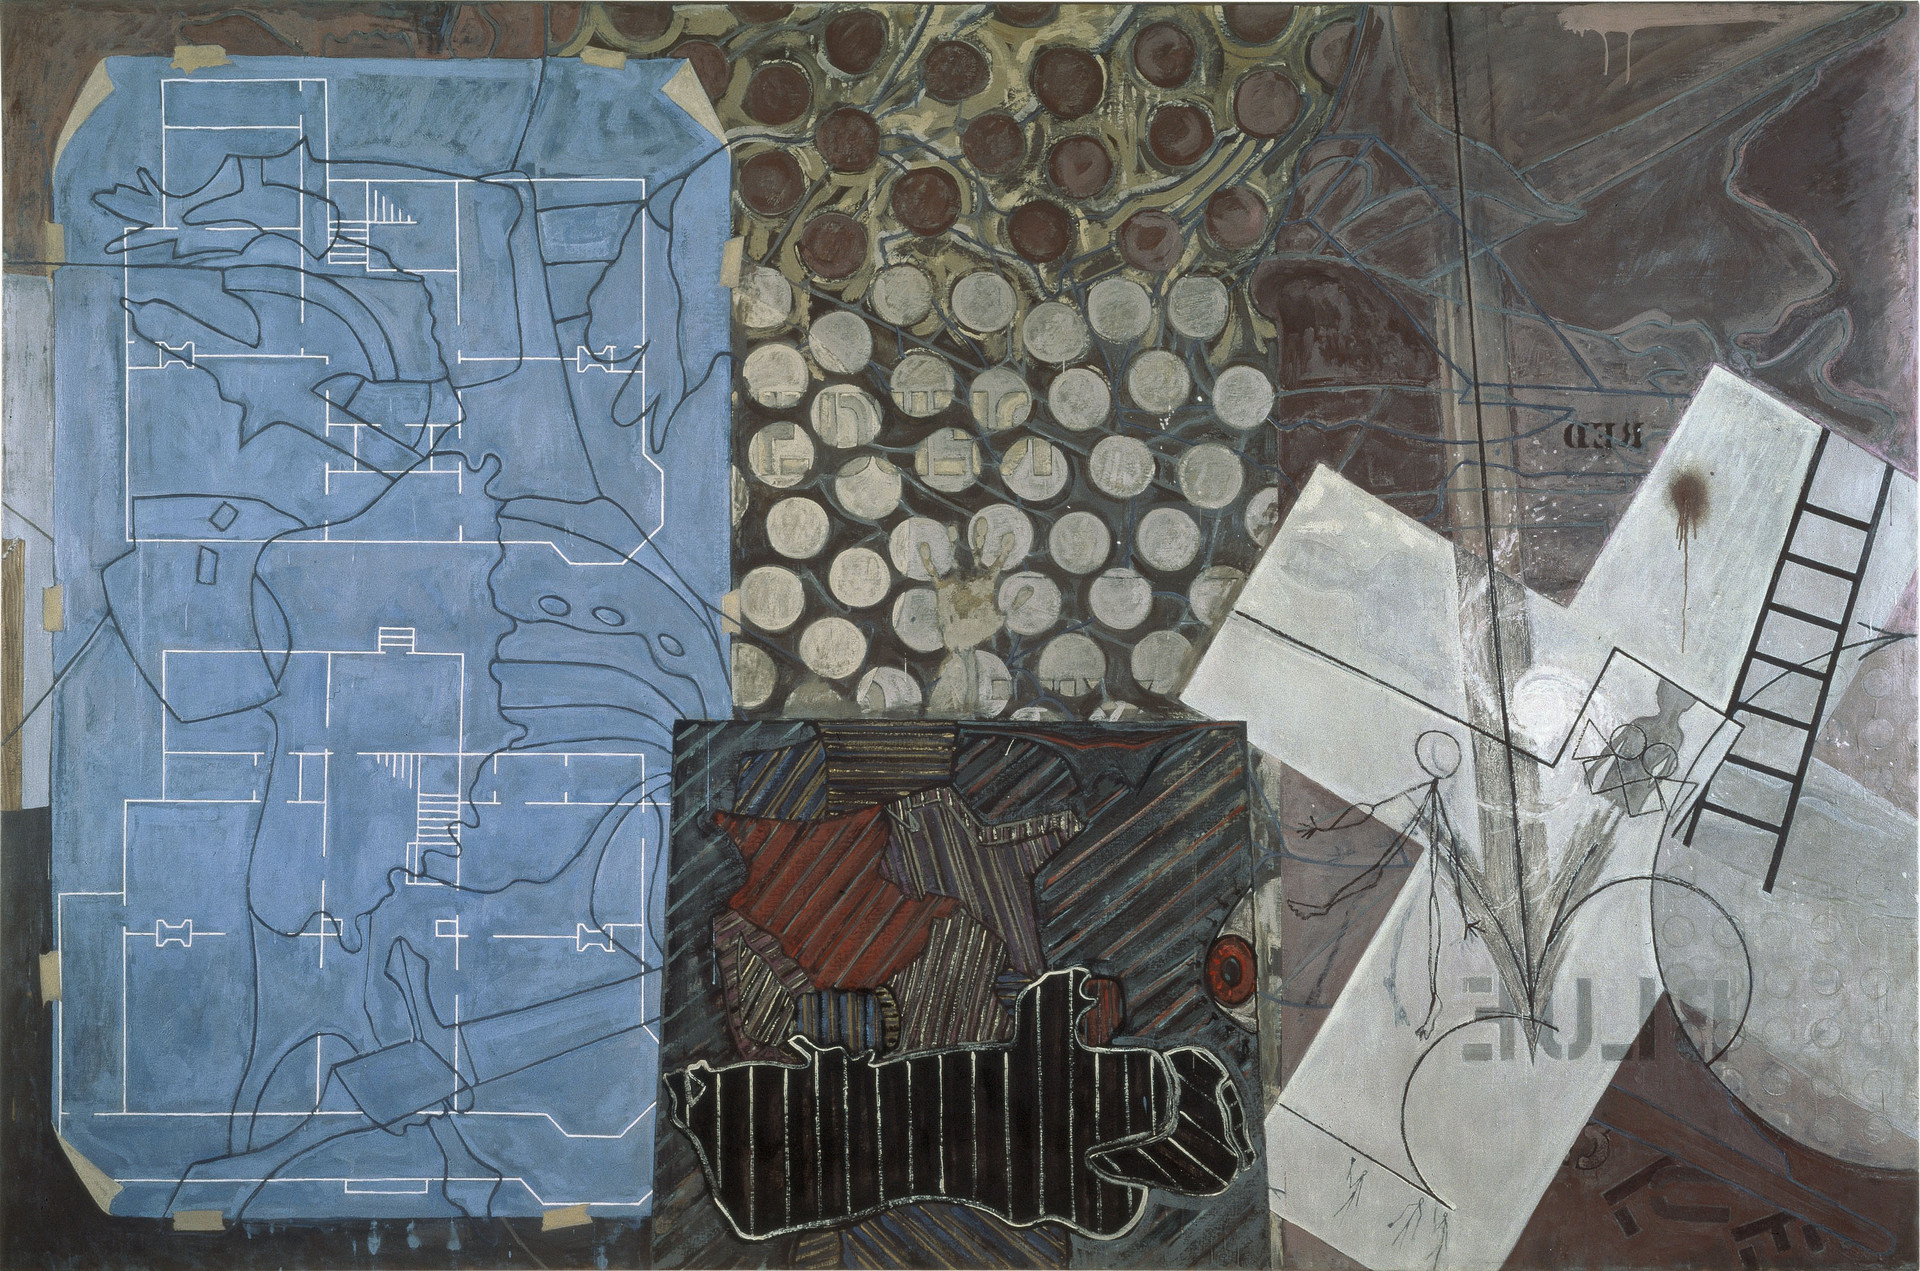 Jasper Johns, “Untitled”, 1992-1994